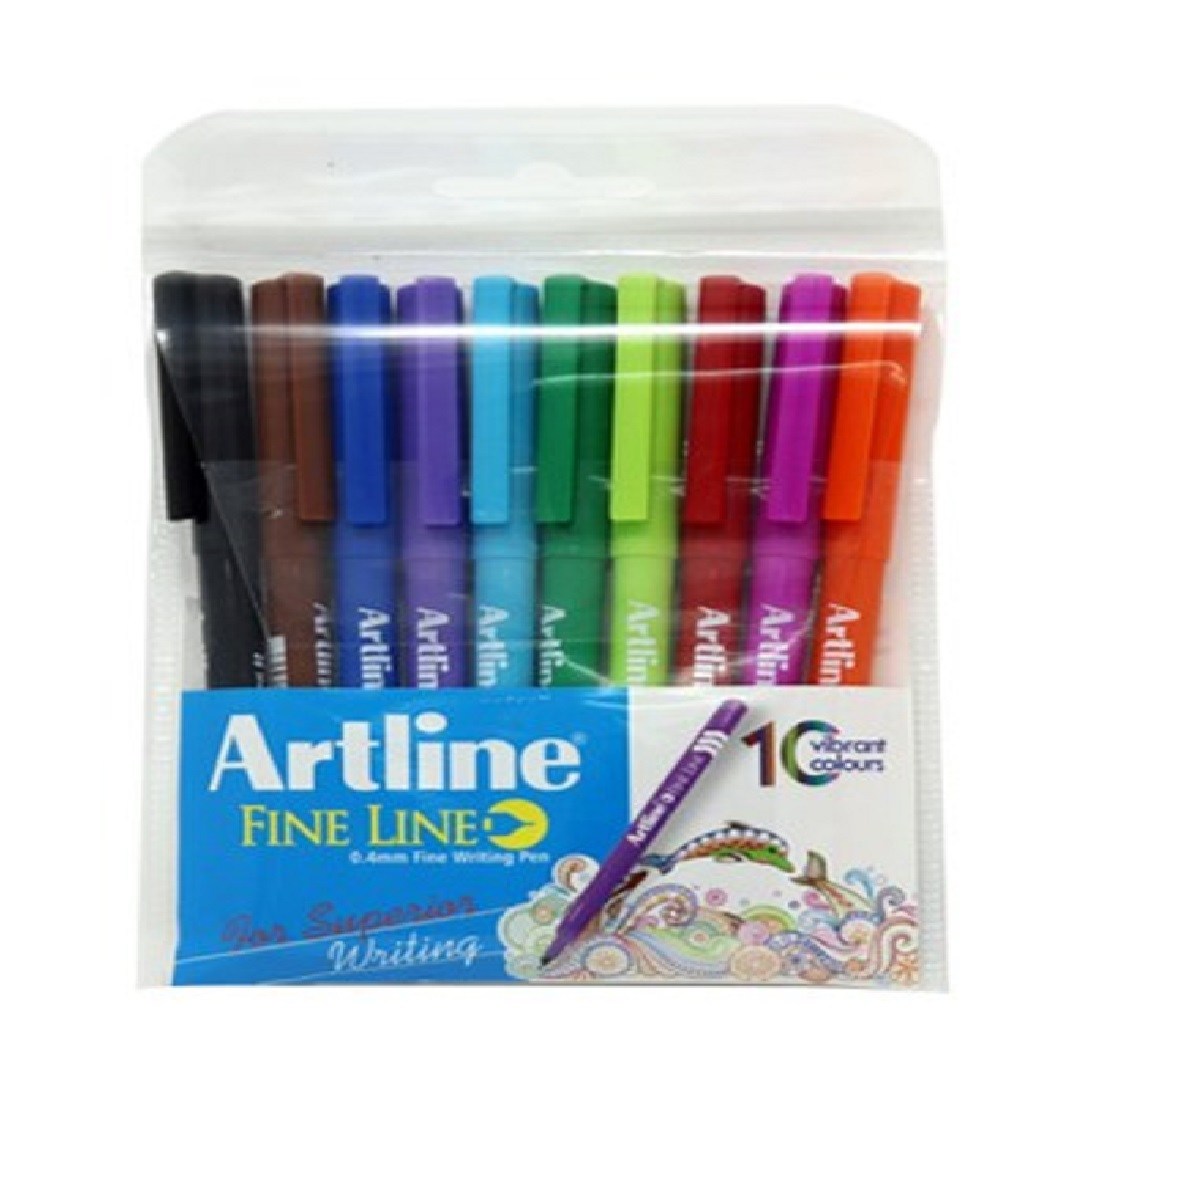 Artline Fine Line 0.4mm Fine Writing Pen Blue